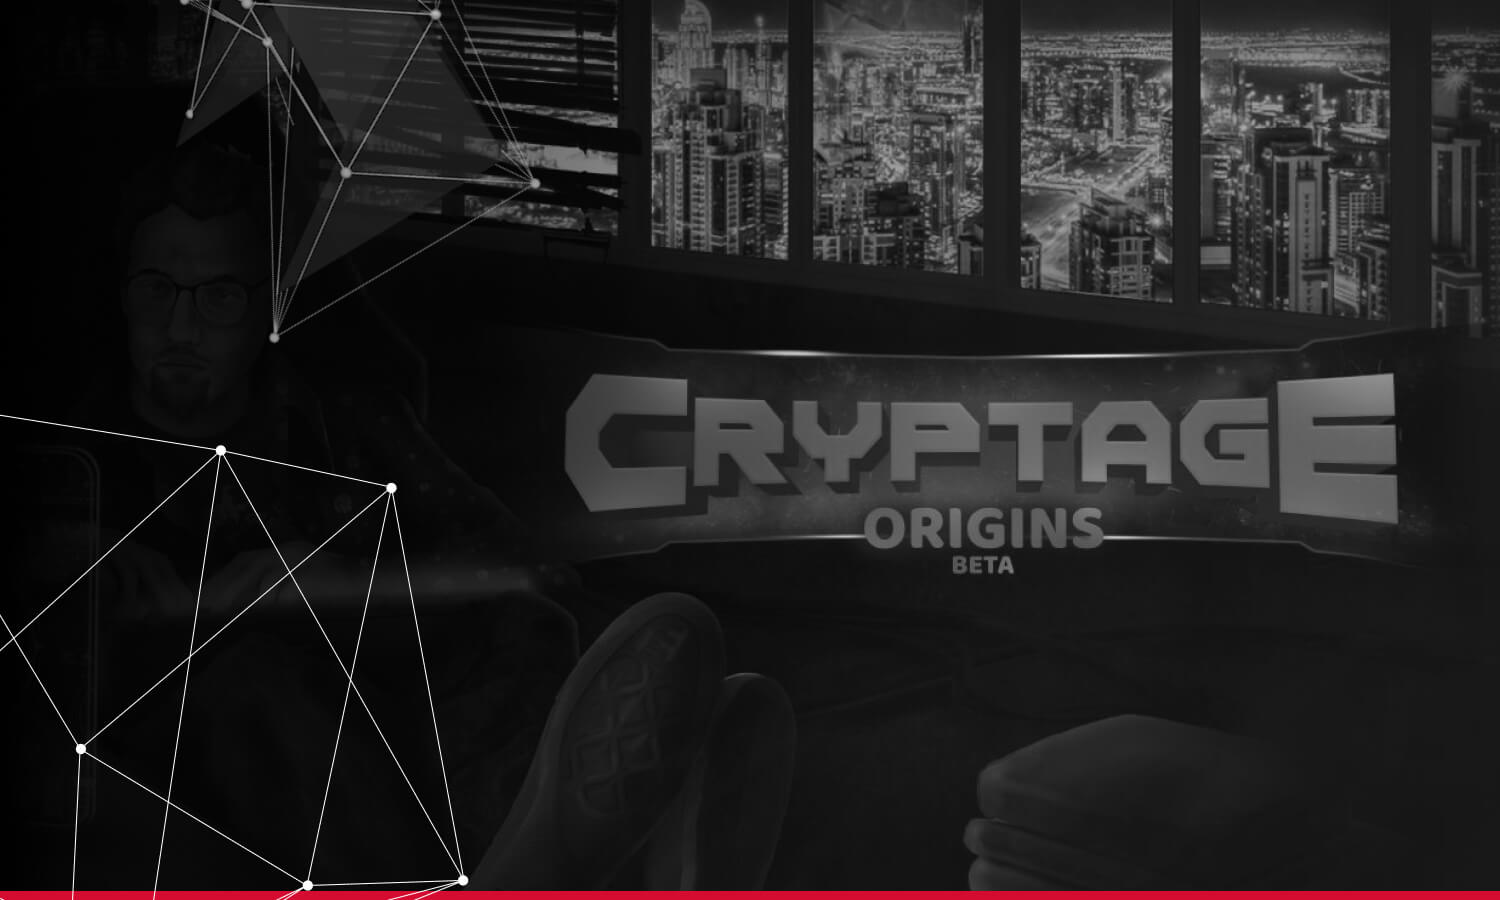 Cryptage Origins status - is it game over?